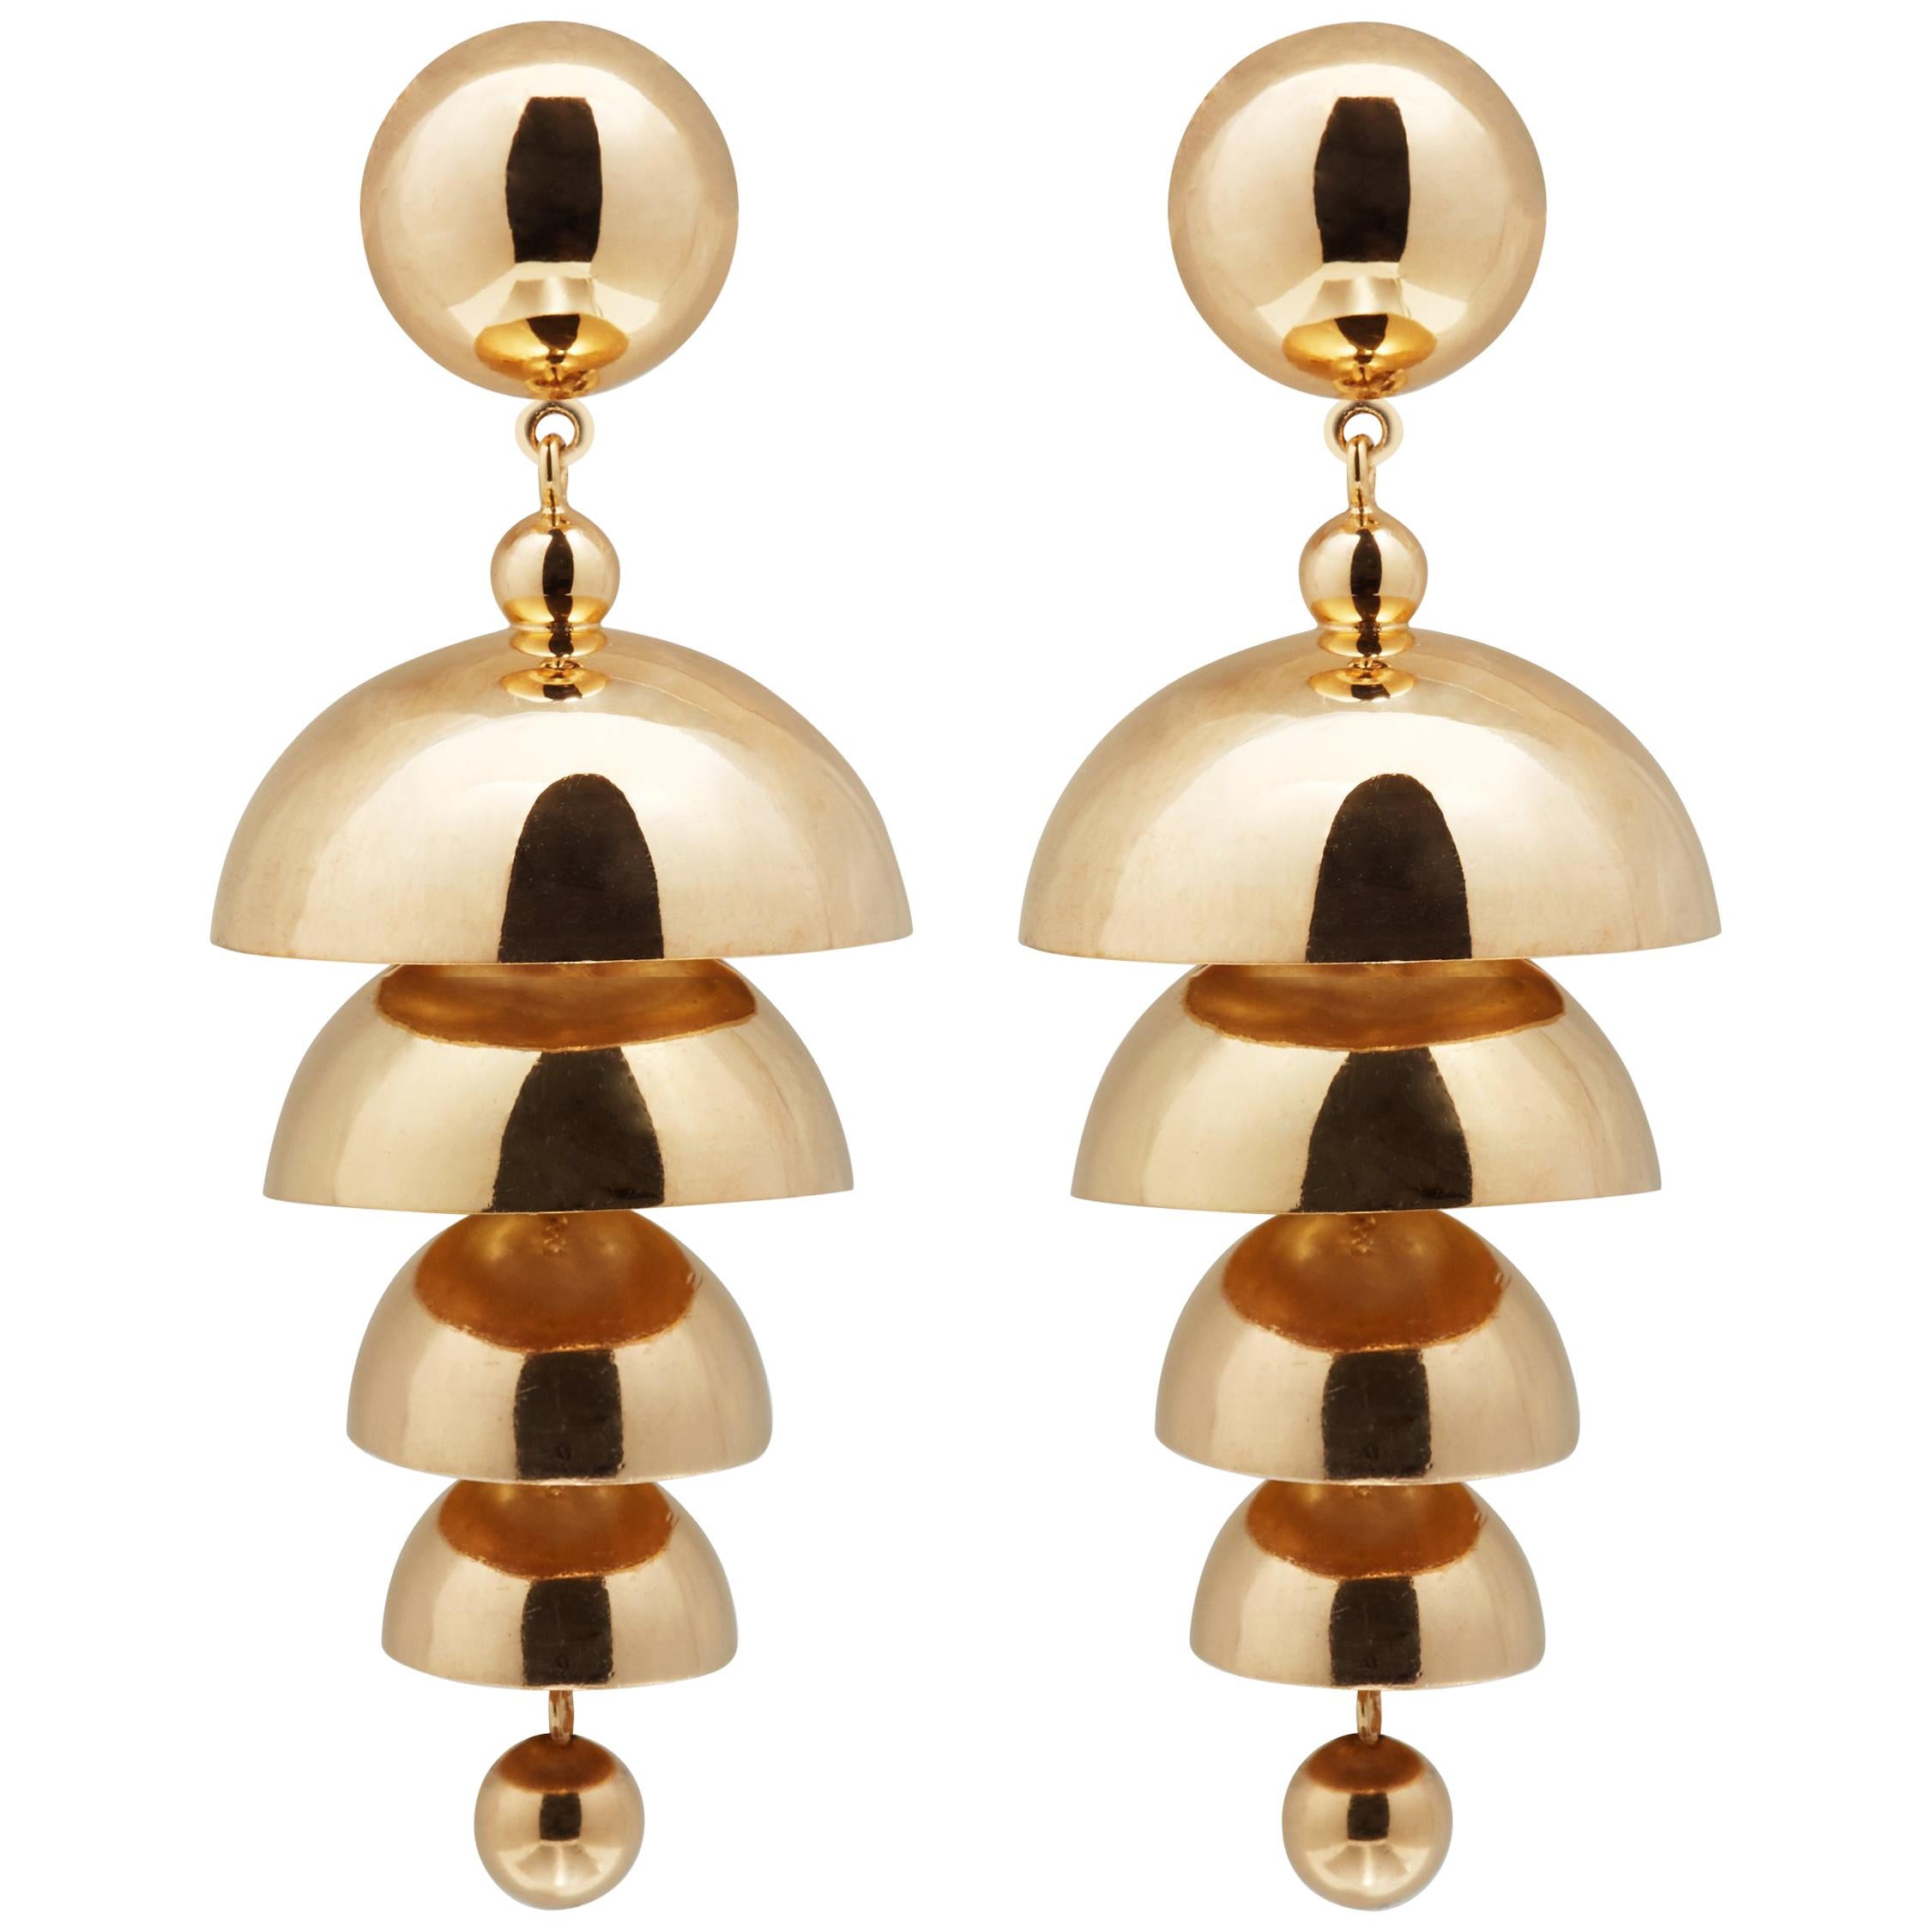 AGMES 18kt Gold Vermeil Layered Chandelier Drop Sculptural Earrings